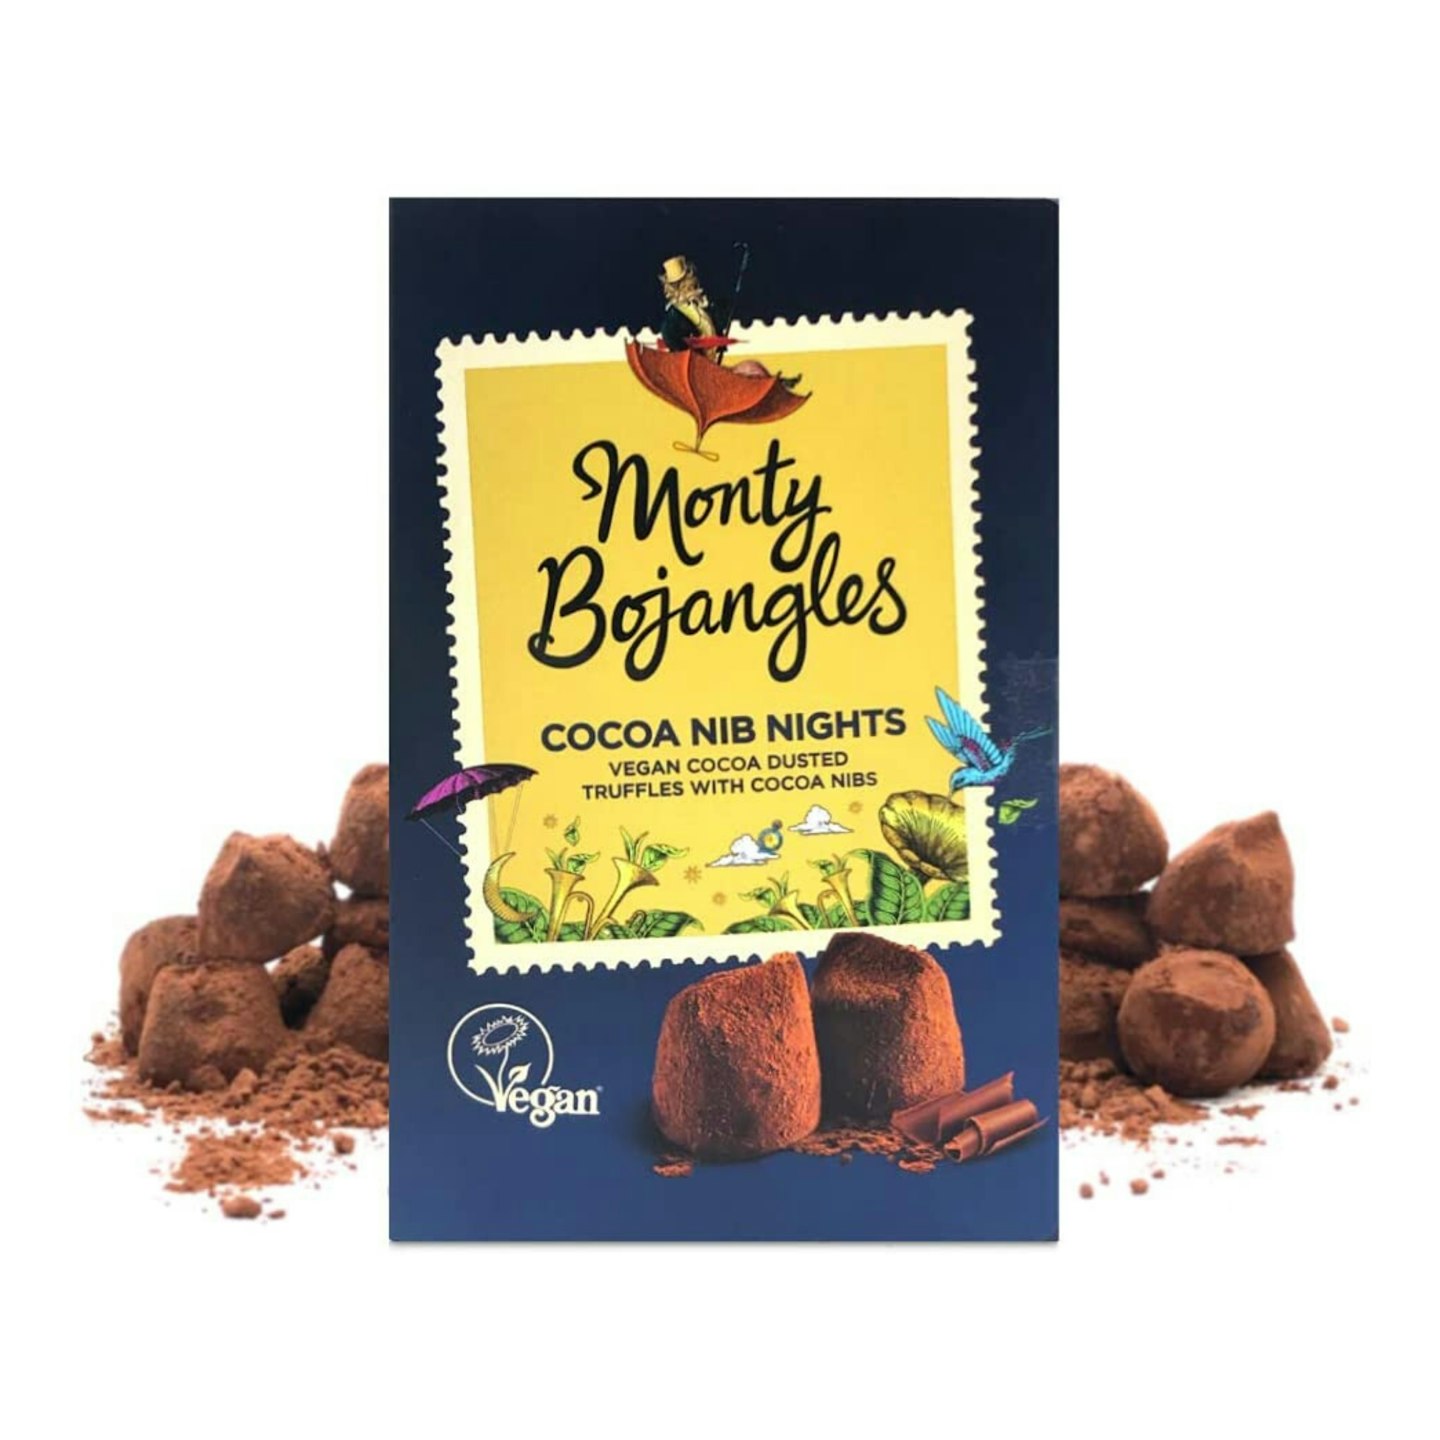 Monty Bojangles Vegan Cocoa Dusted Truffles Cocoa Nib Nights